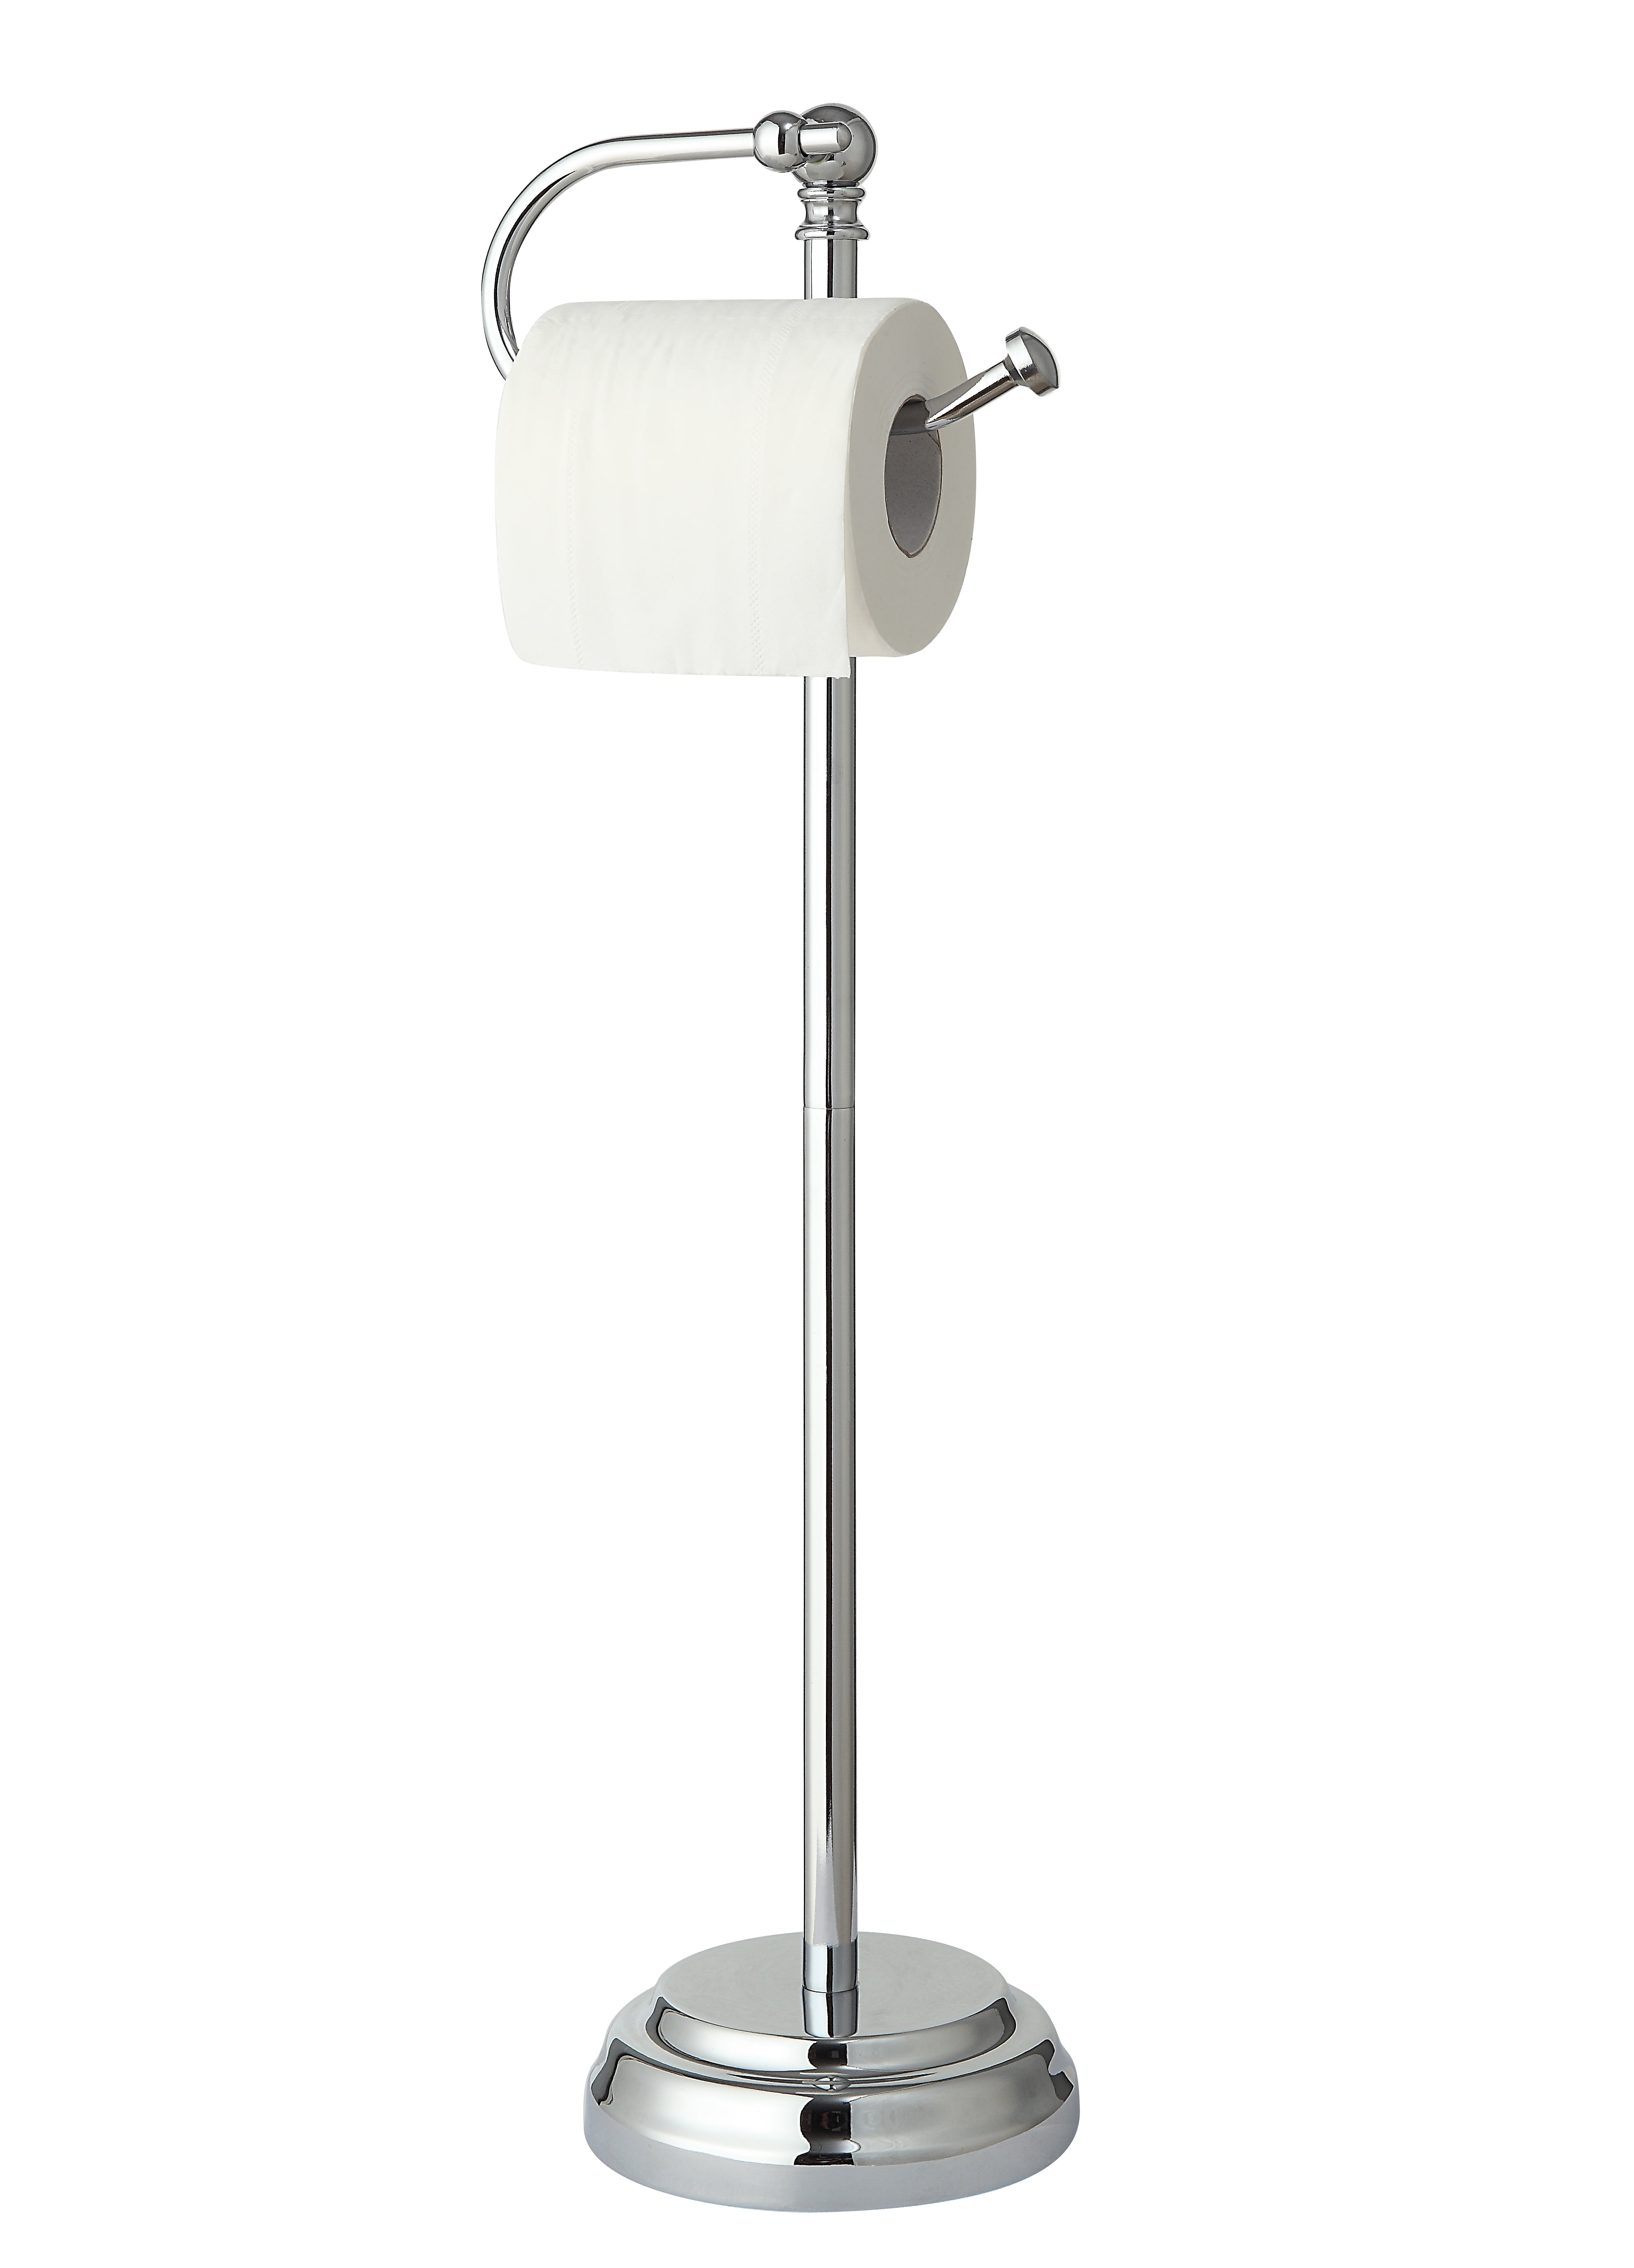 SunnyPoint Heavy Wire Gauge Spare Bathroom Toilet Tissue Paper Roll Holder Storage Stand Chrome